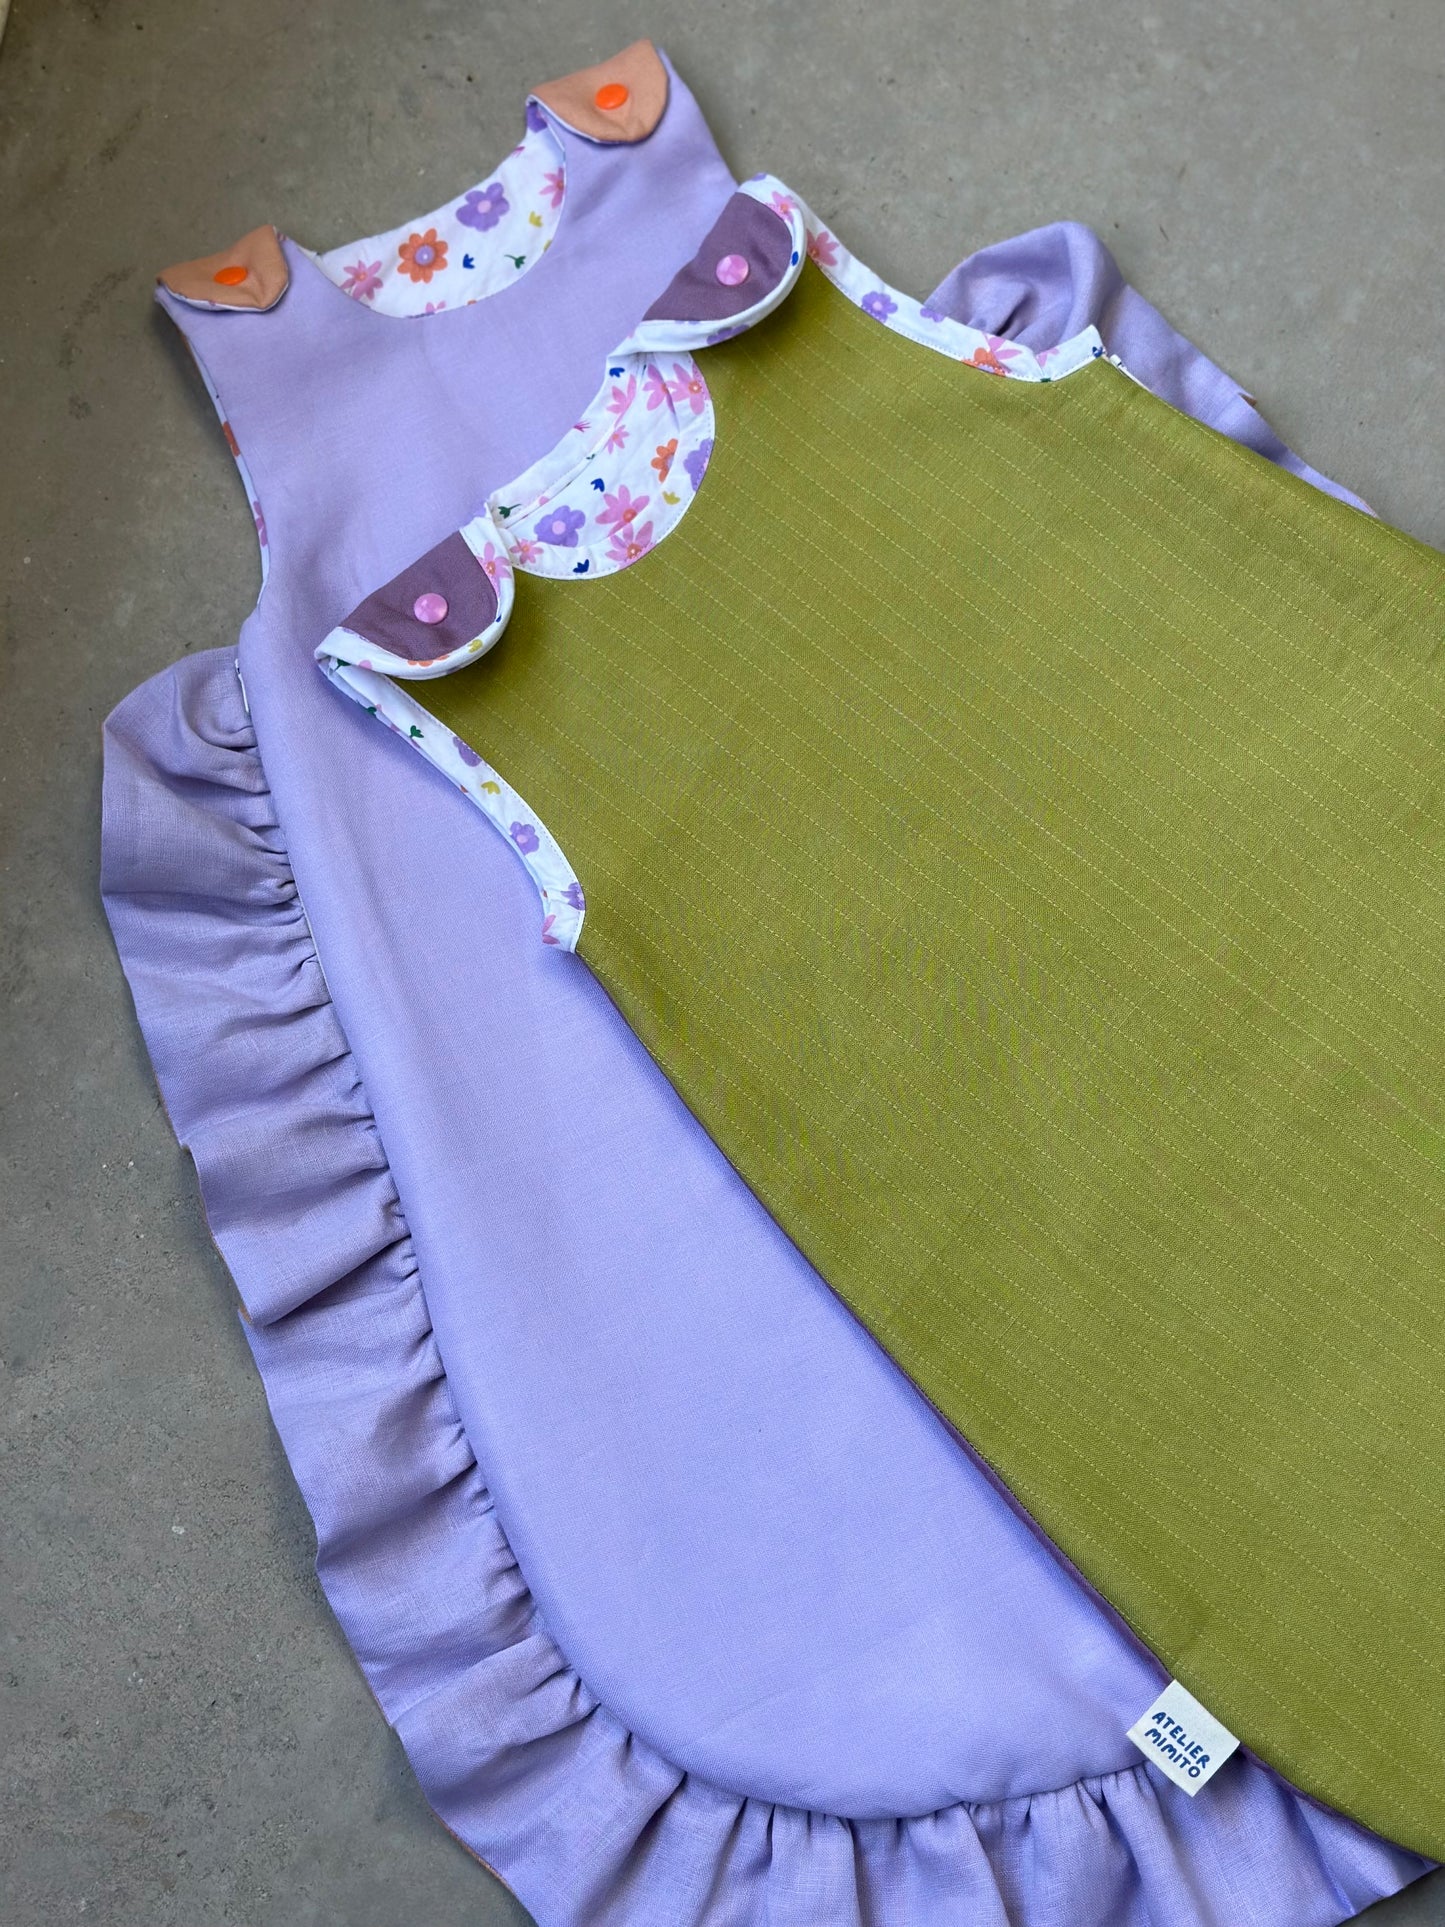 DODO Baby Sleep Sack PDF Sewing Pattern